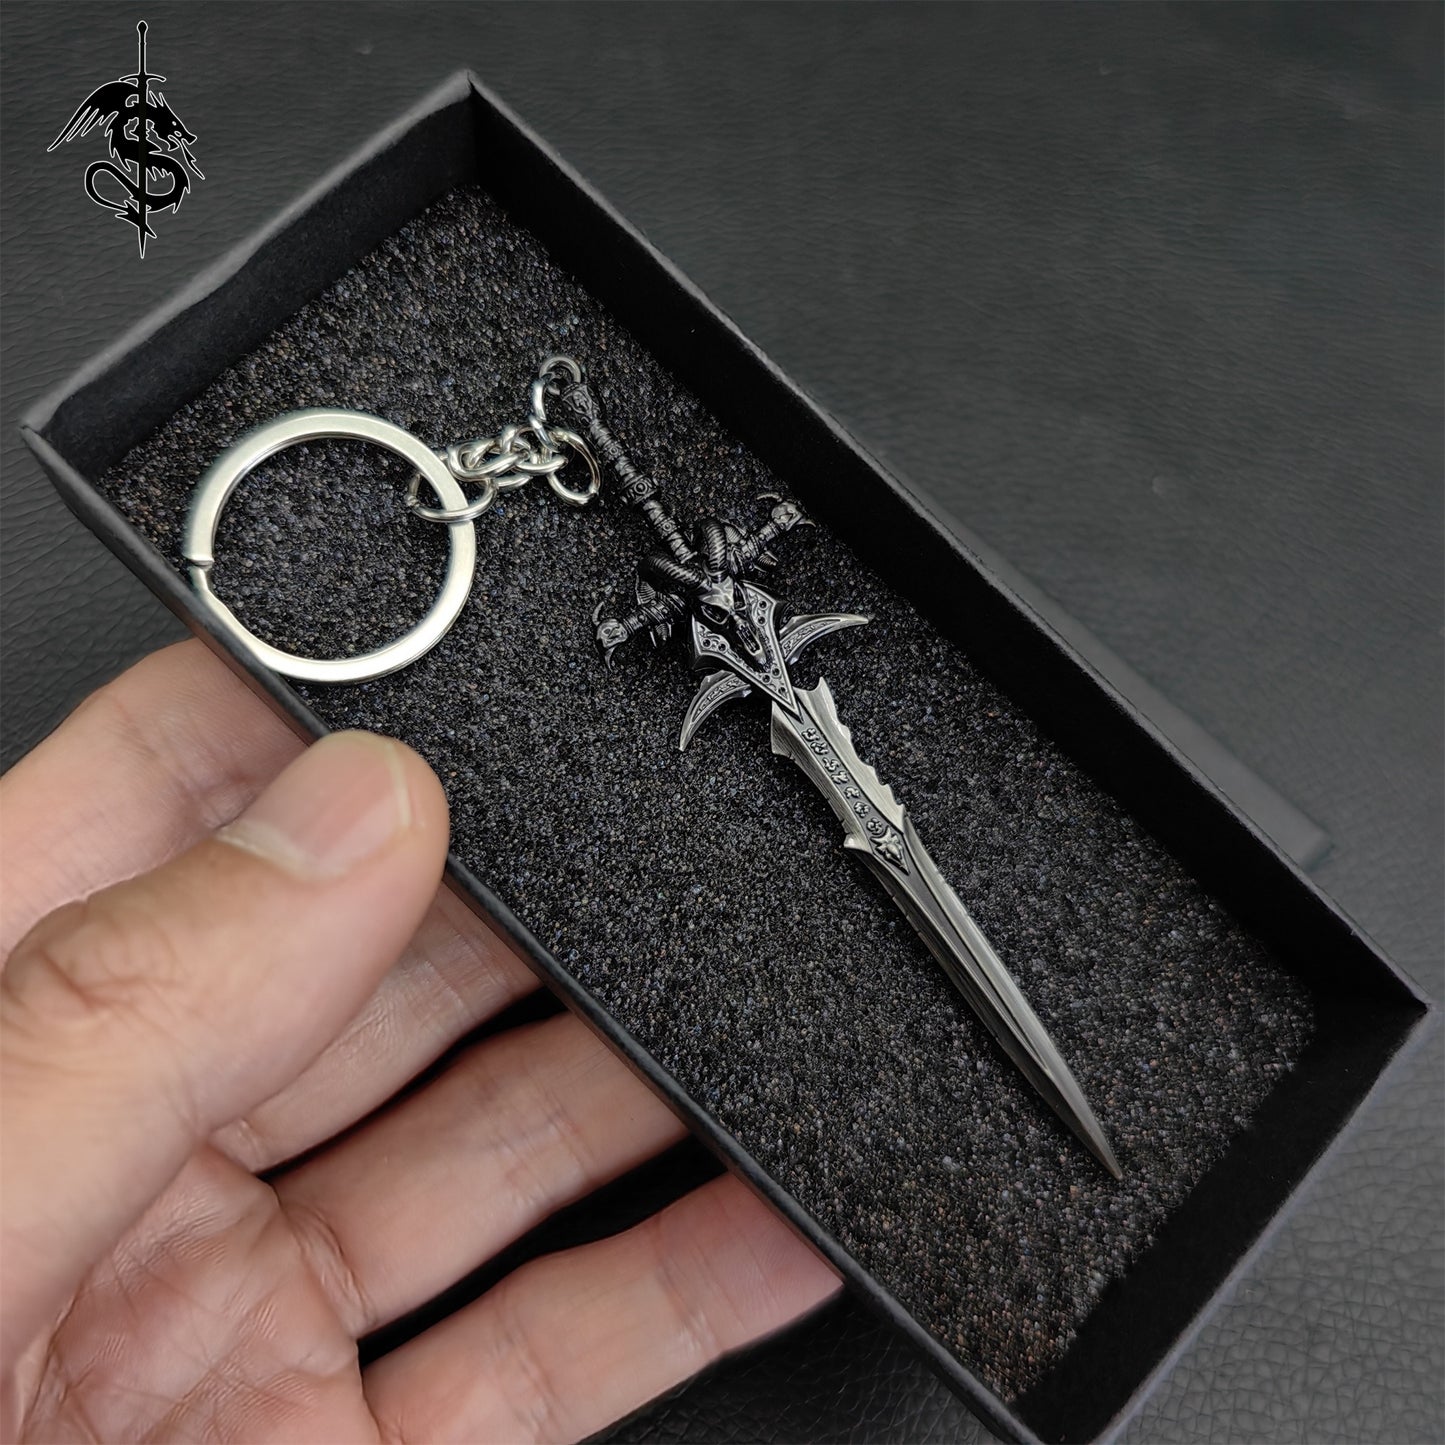 WOW Classical Weapons keychain Fan Art 6 in 1 Pack